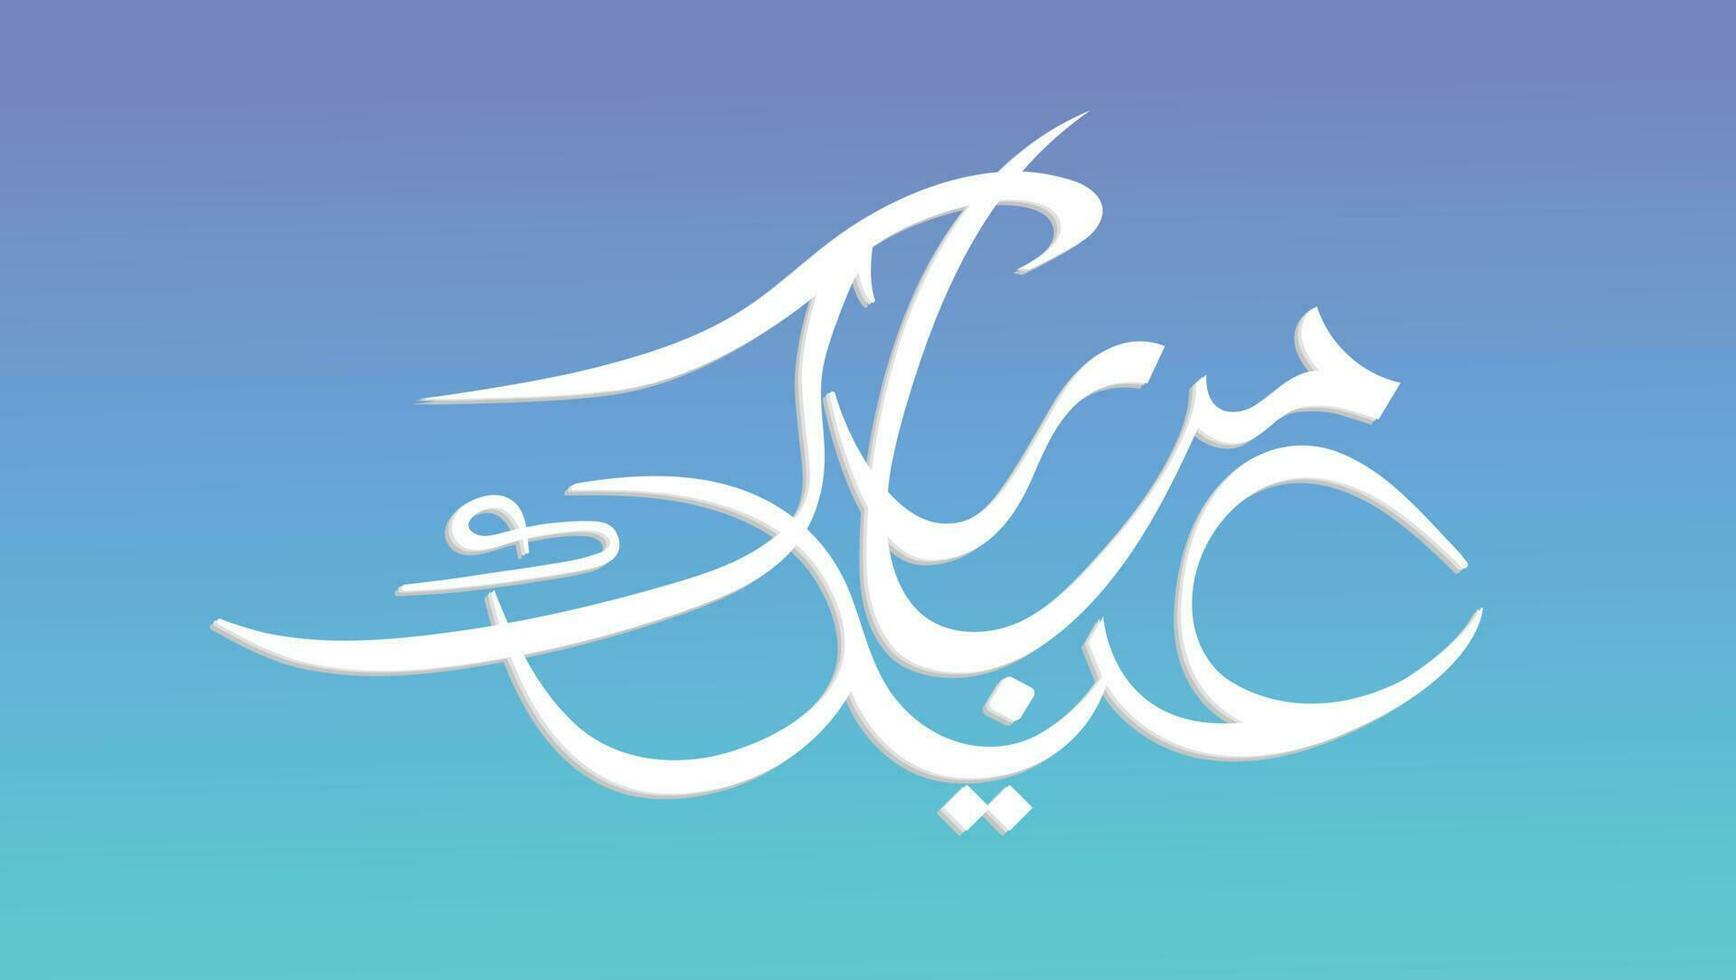 Urdu Calligraphy Of Eid Mubarak Celebration Of Muslim Community Festival Vector Illustration